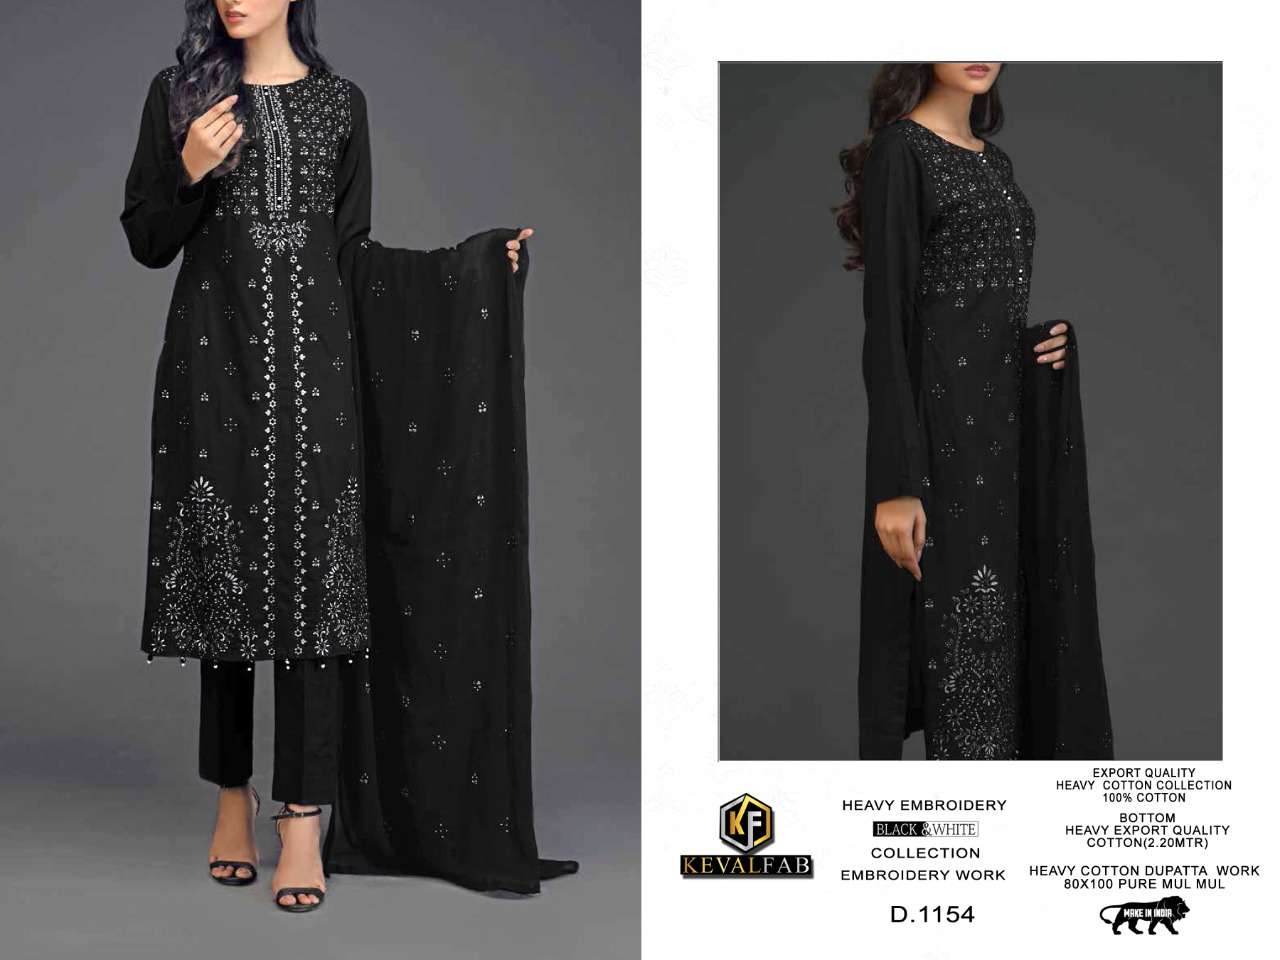 keval fab black and white premium embroidery work salwar kameez wholesale price surat